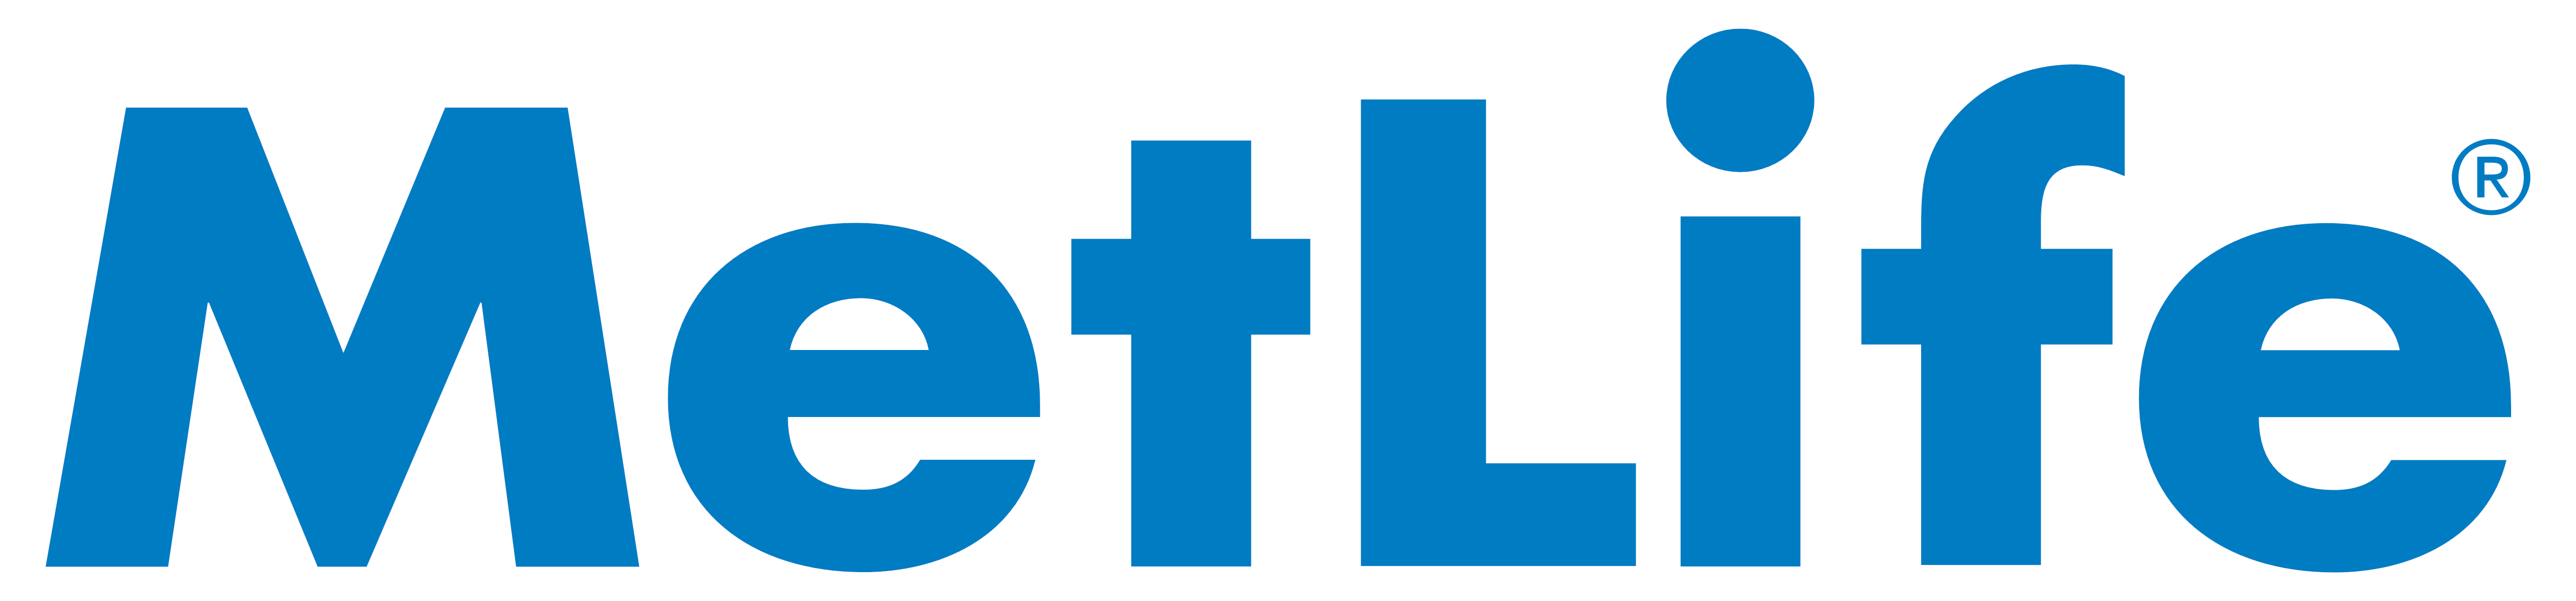 Metlife logo fond PNG image